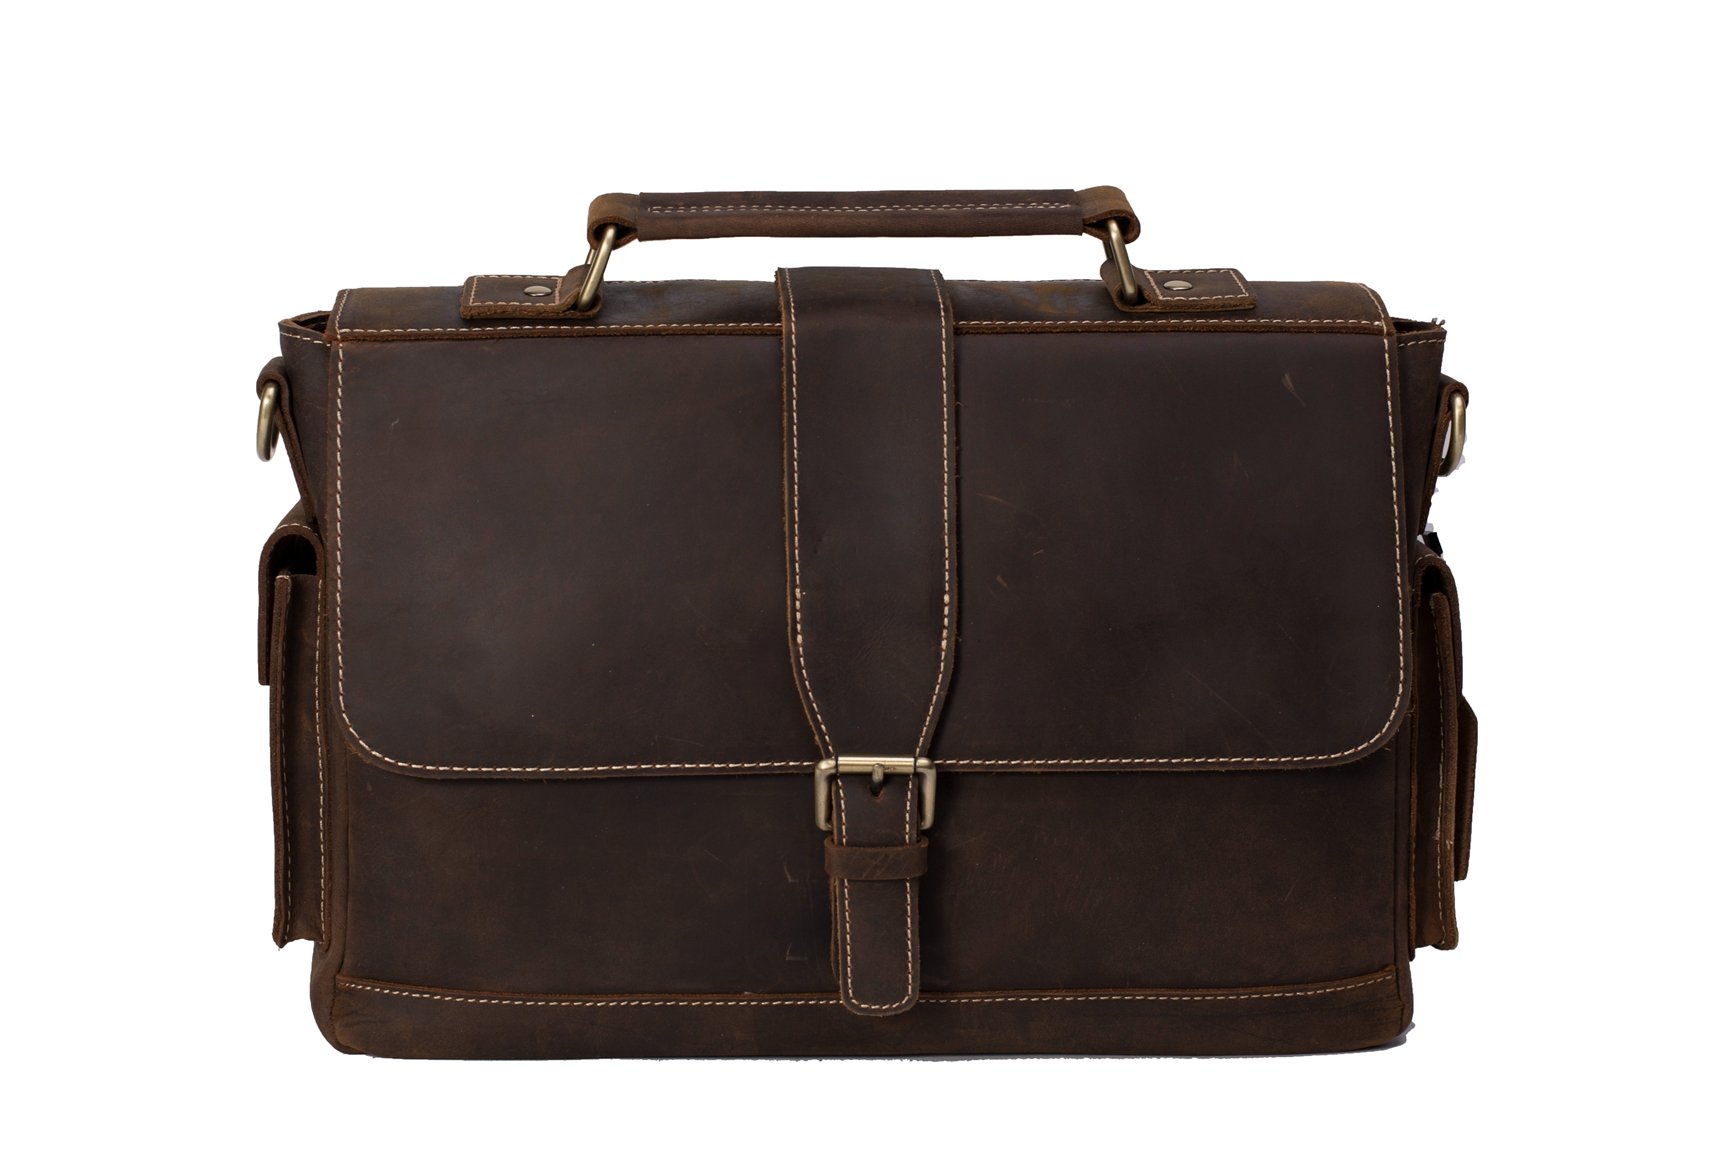 MoshiLeatherBag - Handmade Leather Bag Manufacturer — Handmade Genuine Natural Leather Briefcase ...